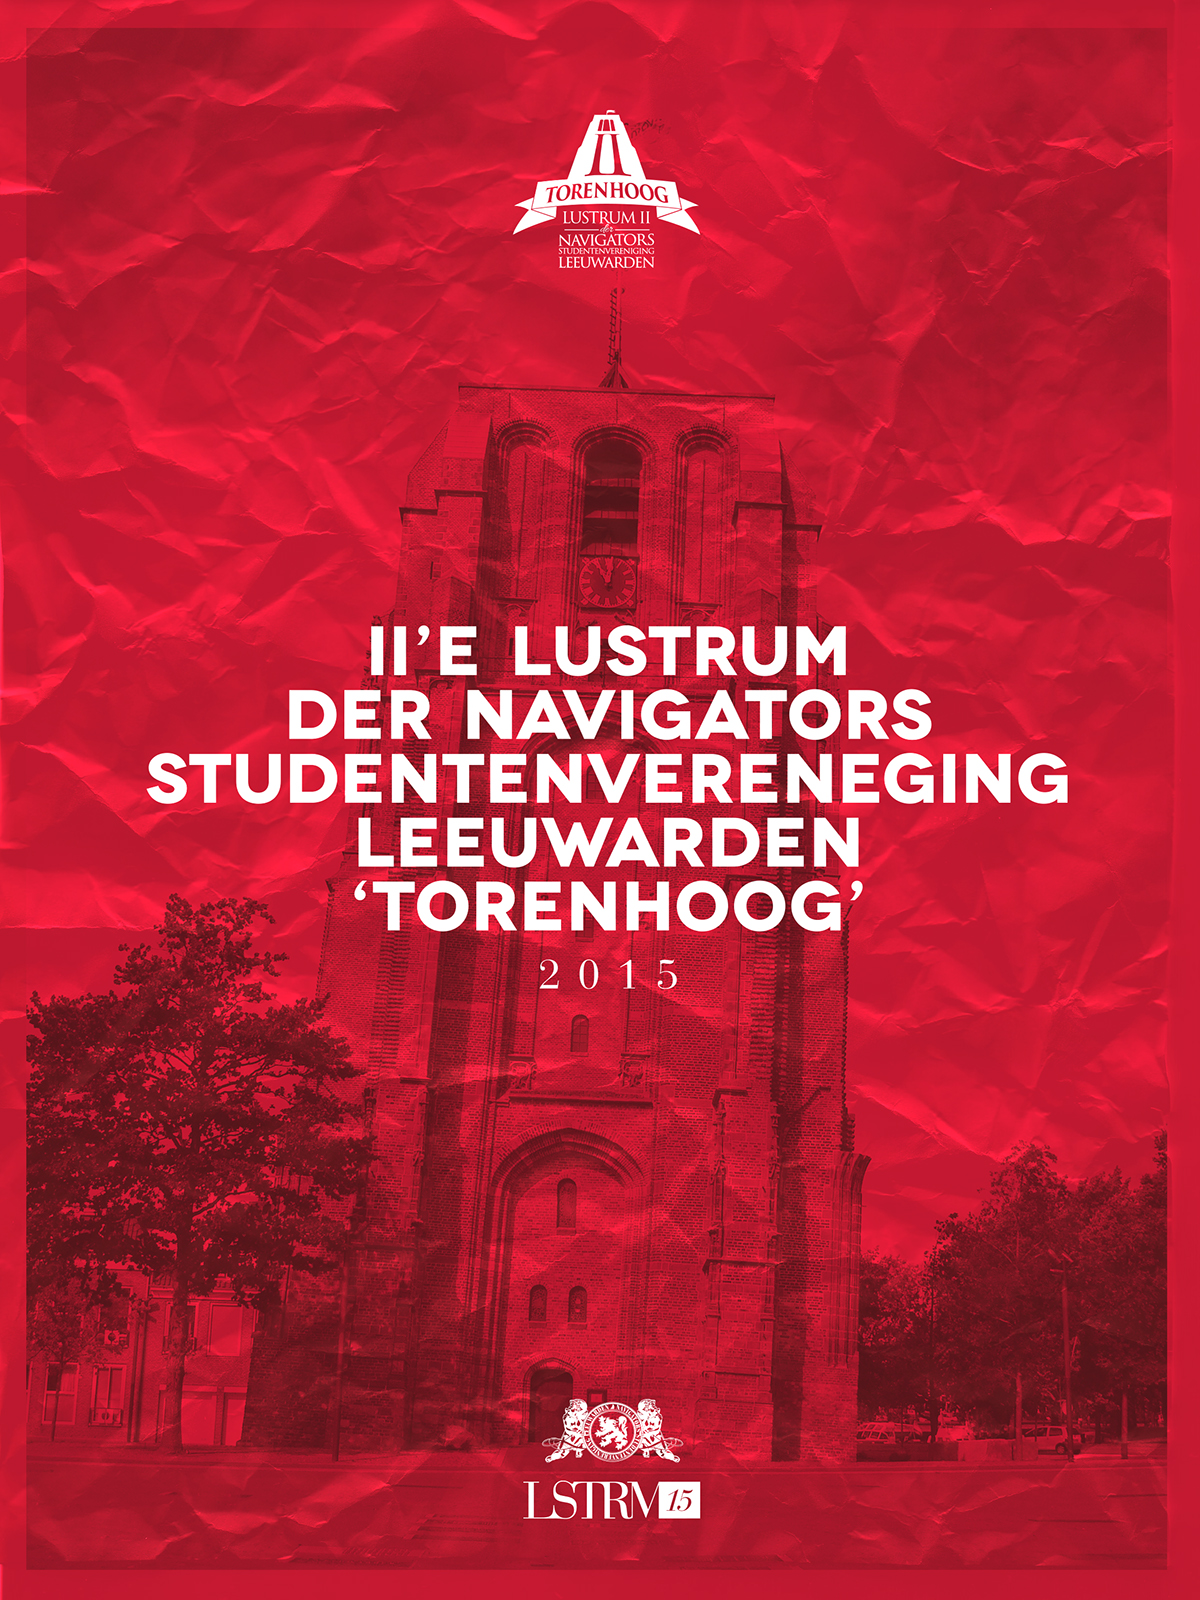 Students design poster flyer